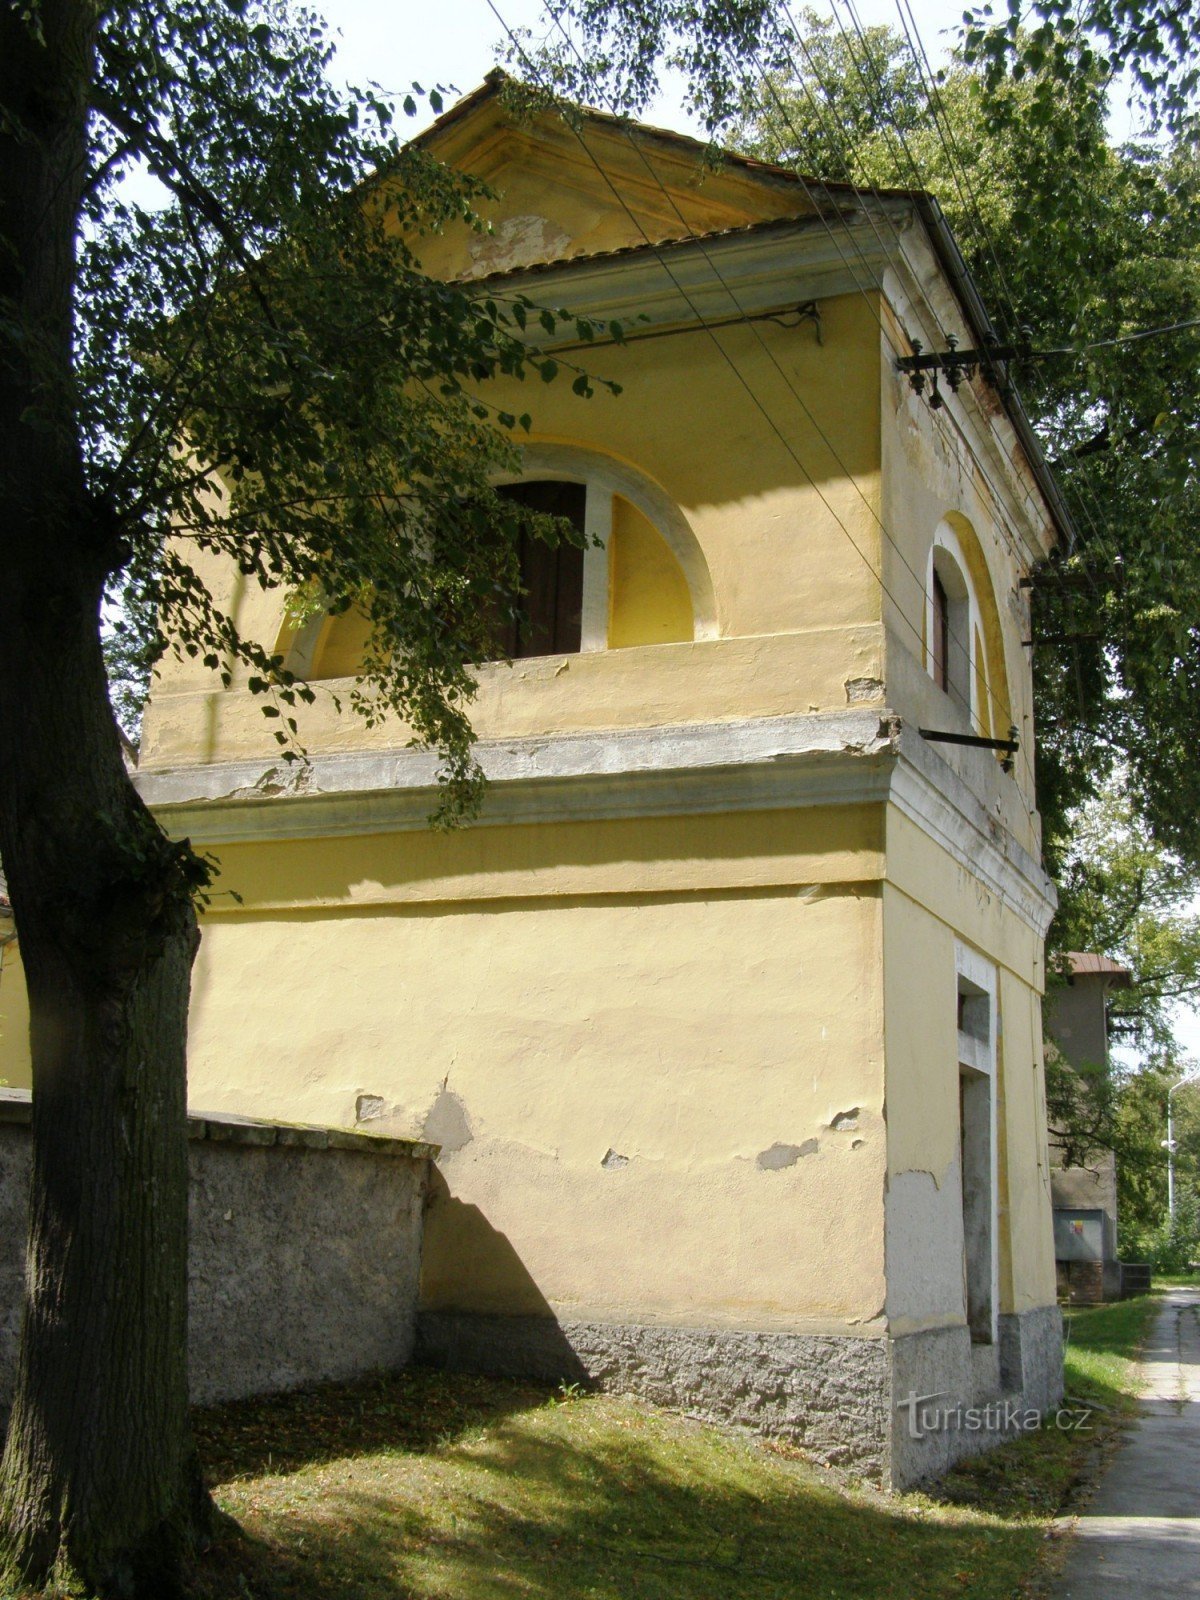 Záhornice - church of St. Matthew